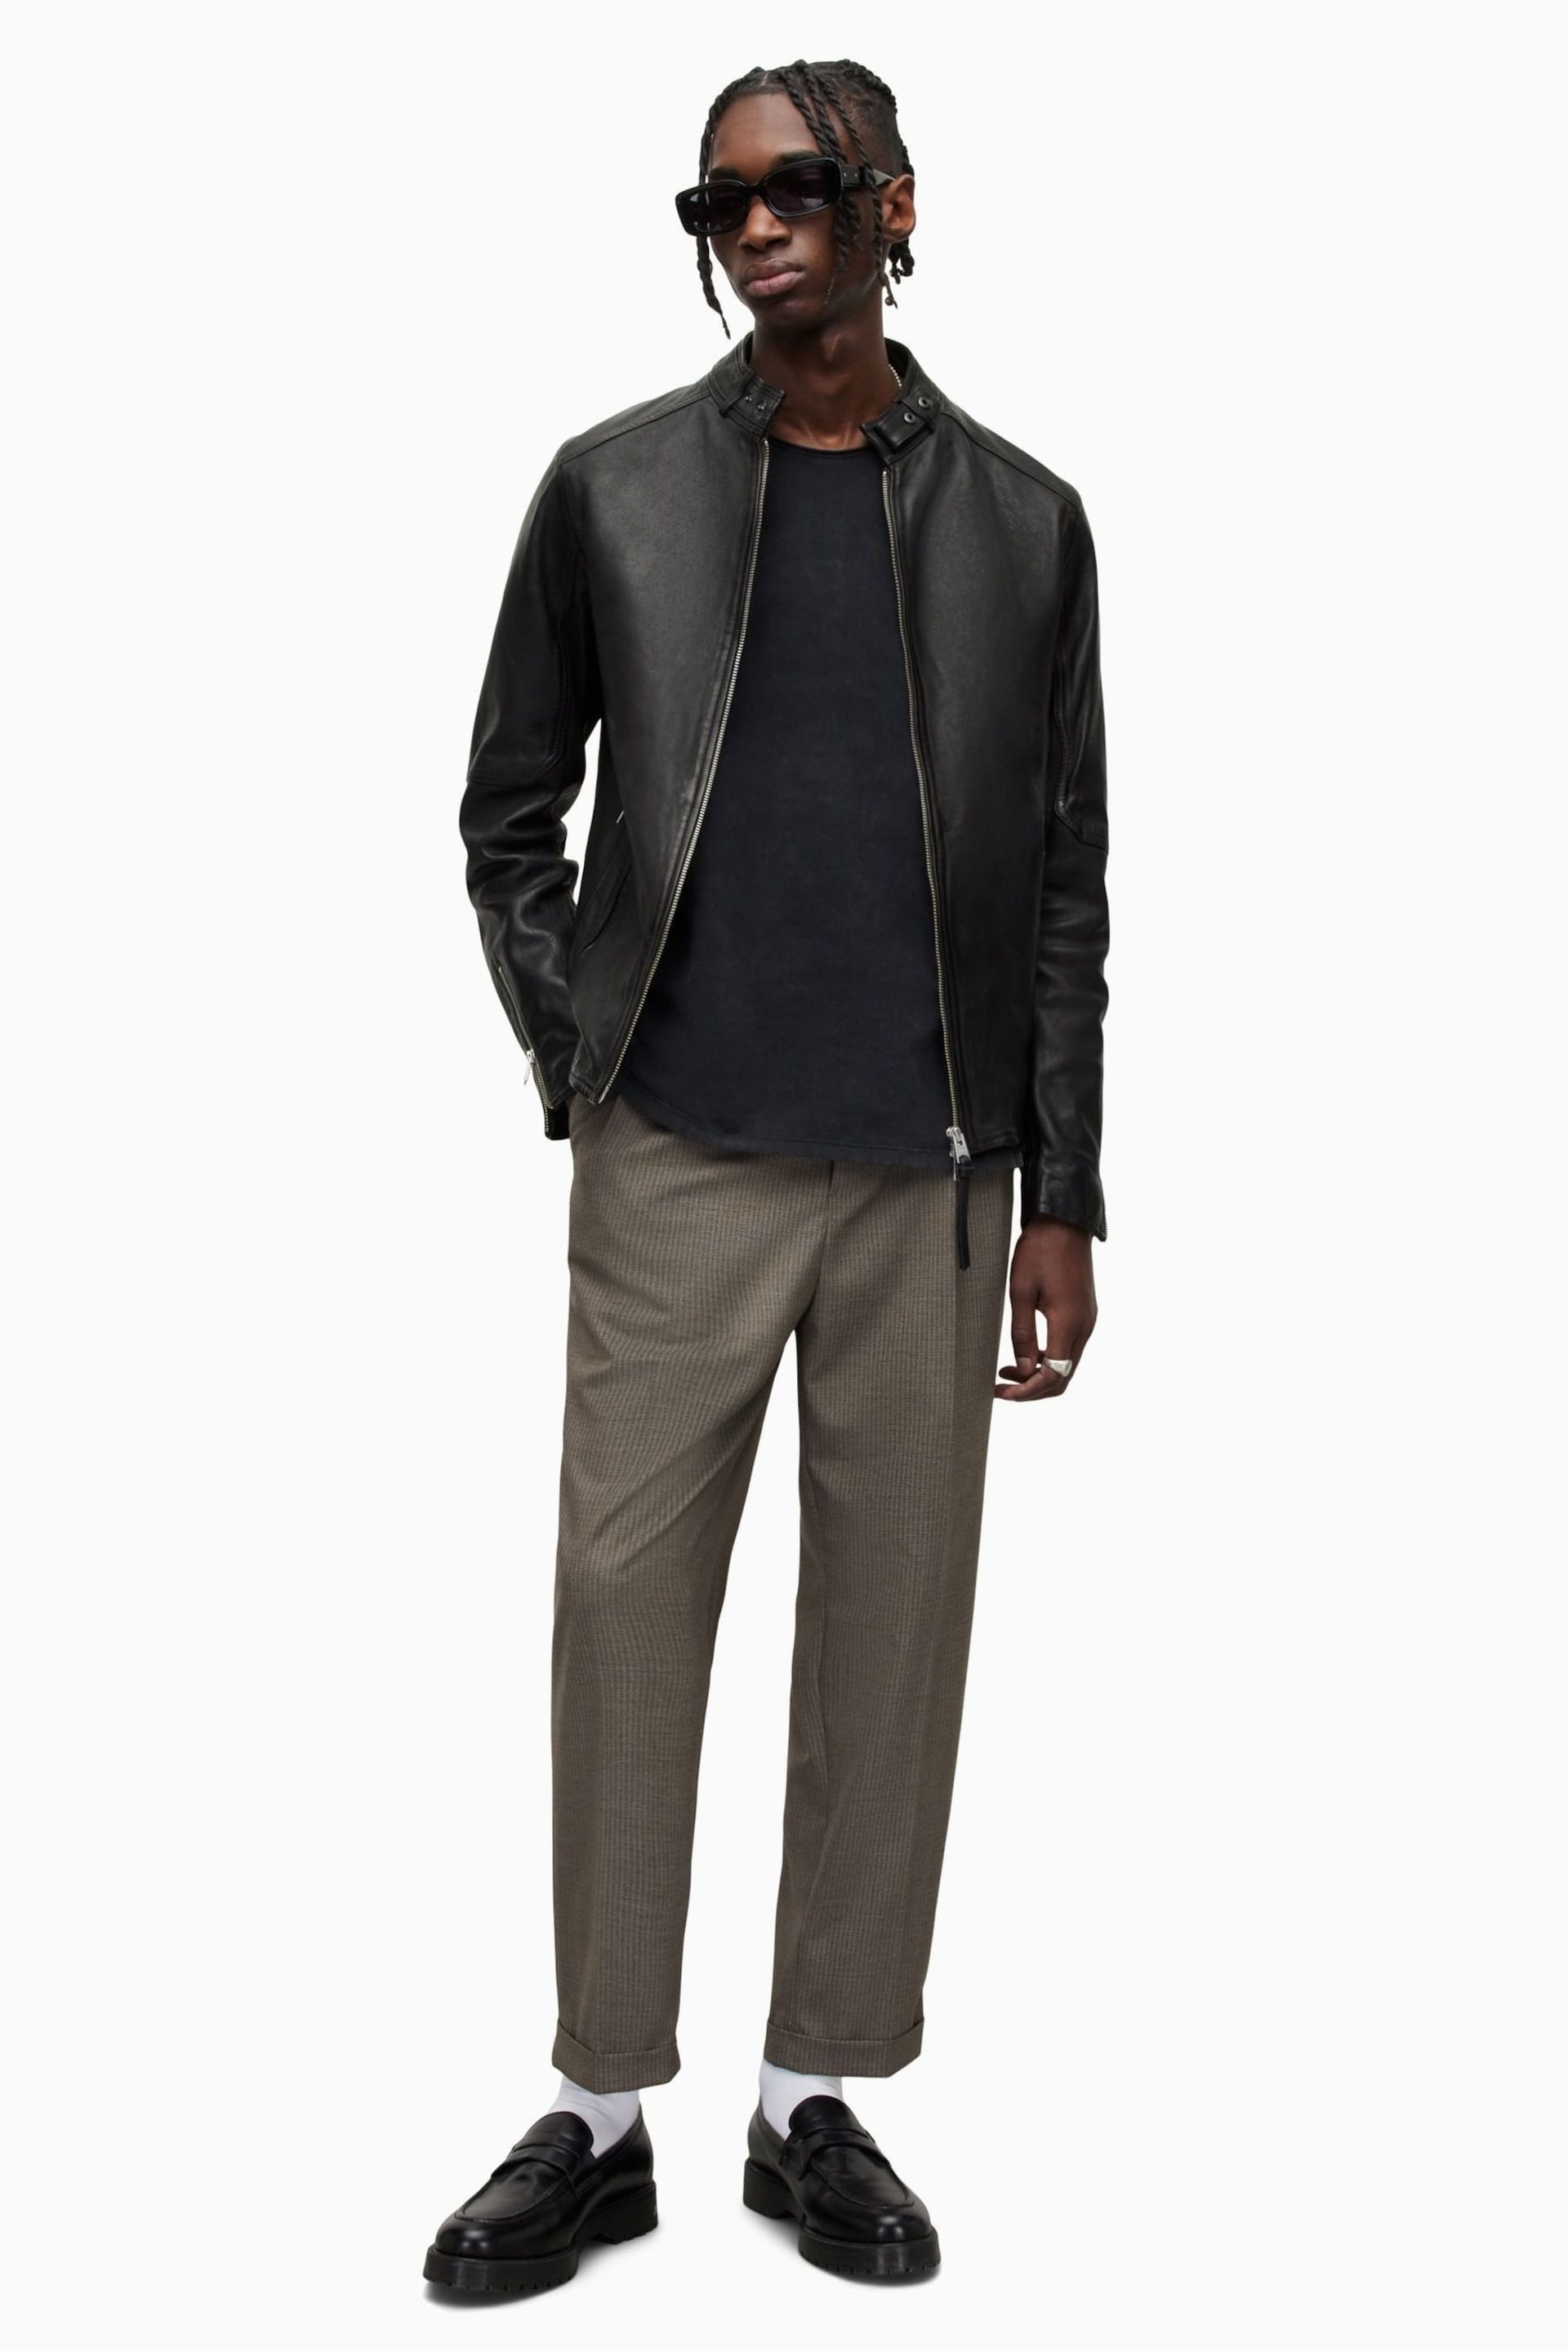 AllSaints Black Cora Leather Jacket - Image 4 of 10